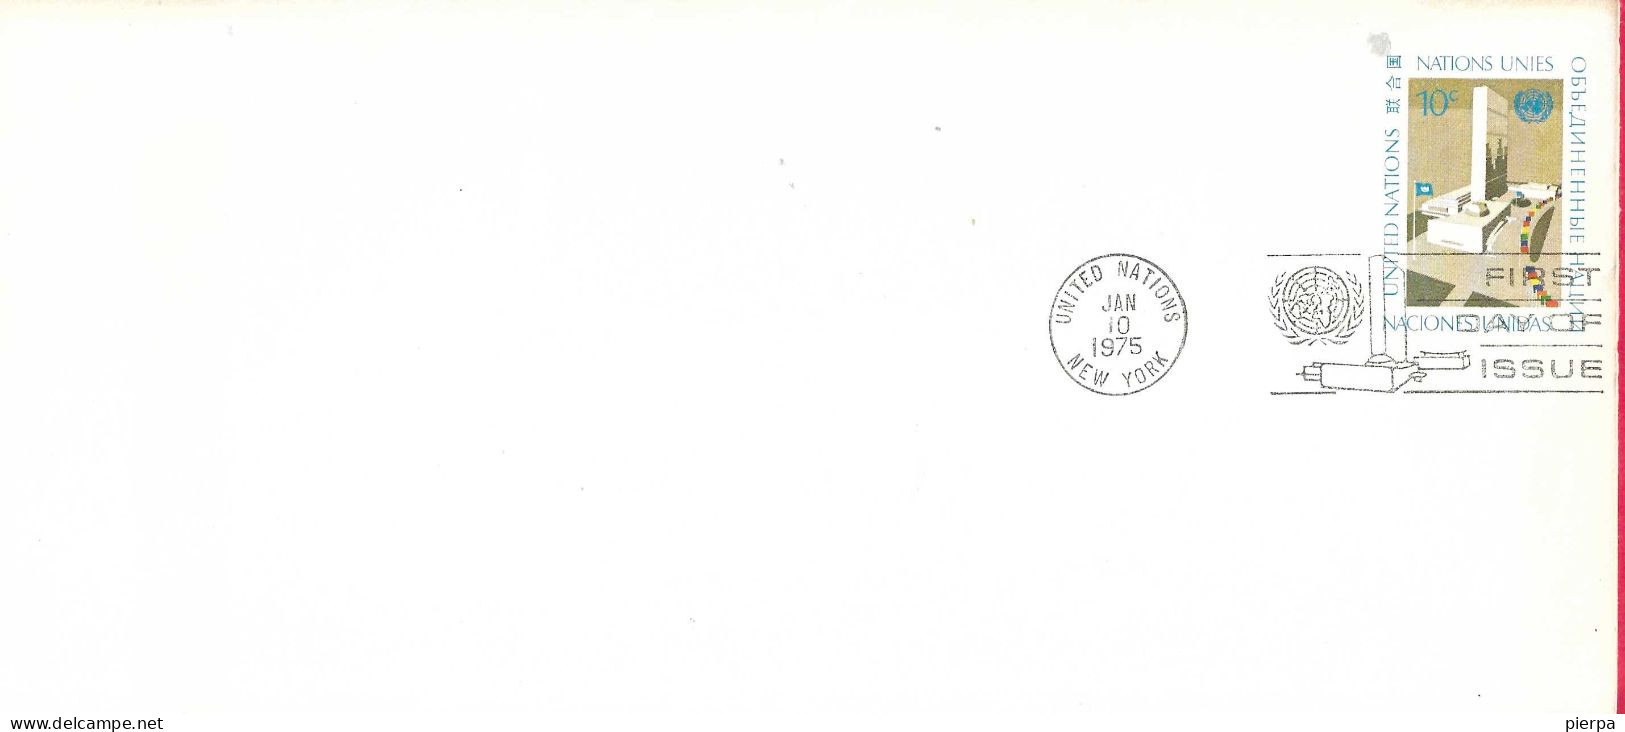 O.N.U. - 1975 - INTERO BUSTA POSTALE CENT. 10 - ANNULLO A TARGHETTA F.D.C*JAN 10, 1975*- FORMATO COMMERCIALE - Lettres & Documents